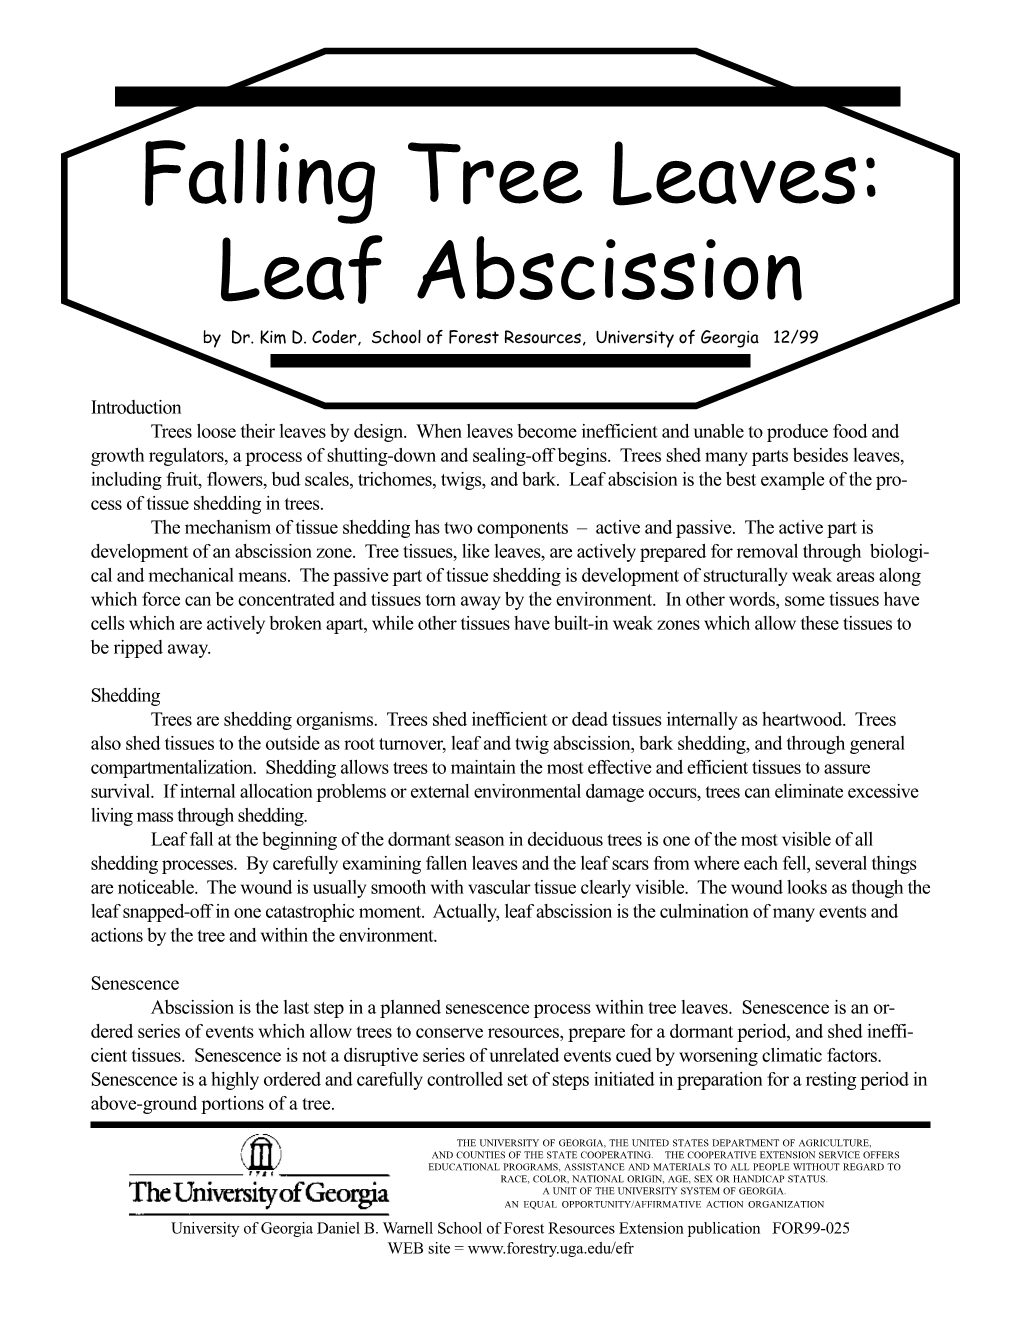 Leaf Abscission by Dr